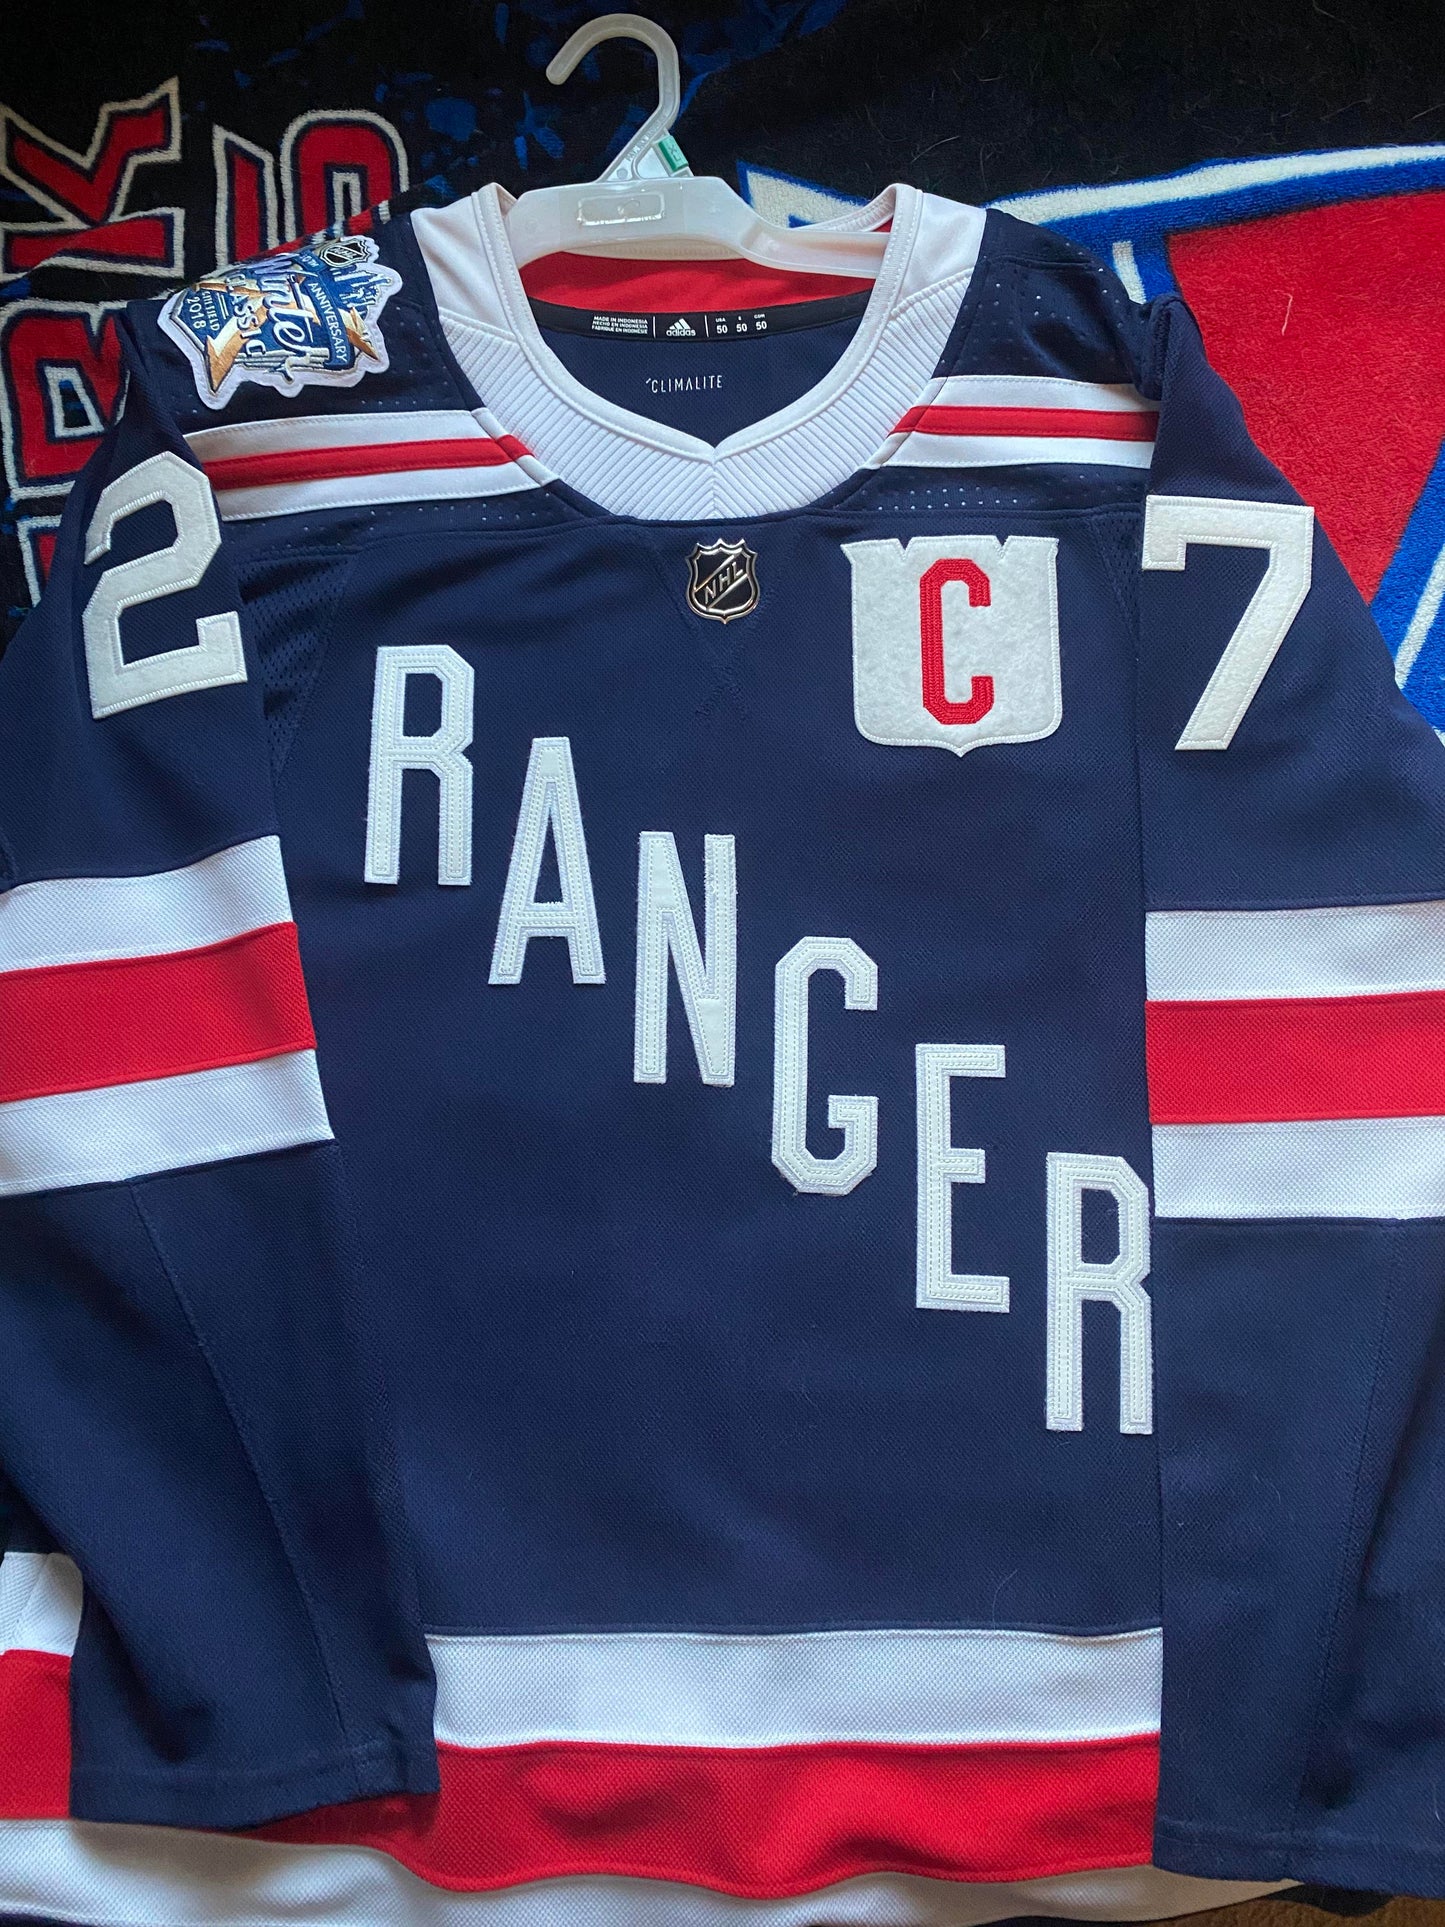 Mark Messier New York Rangers 2018 NHL Winter Classic Adidas Premier Player Jersey - Navy